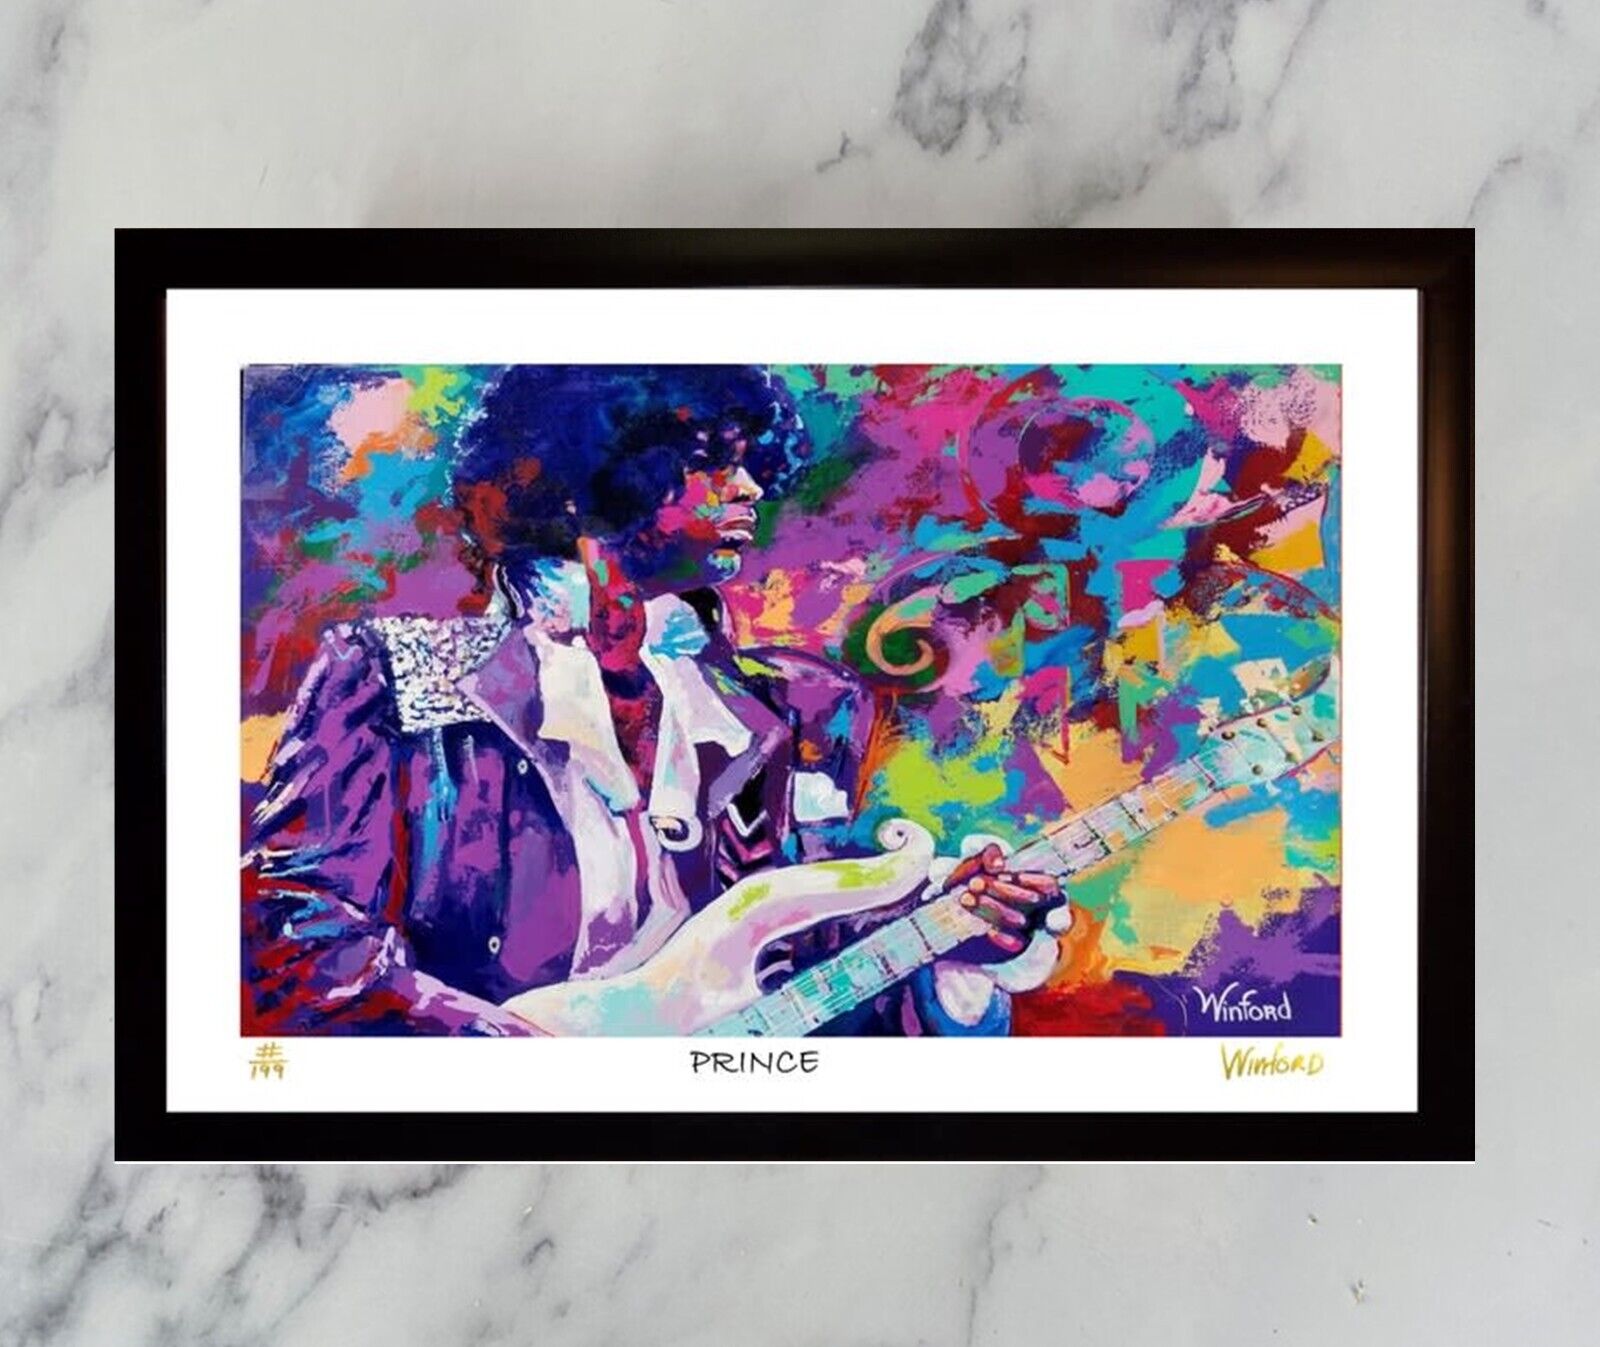 Sale Prince L.E. Premium Art Print, By Winford Was $149.95 Now $99.95